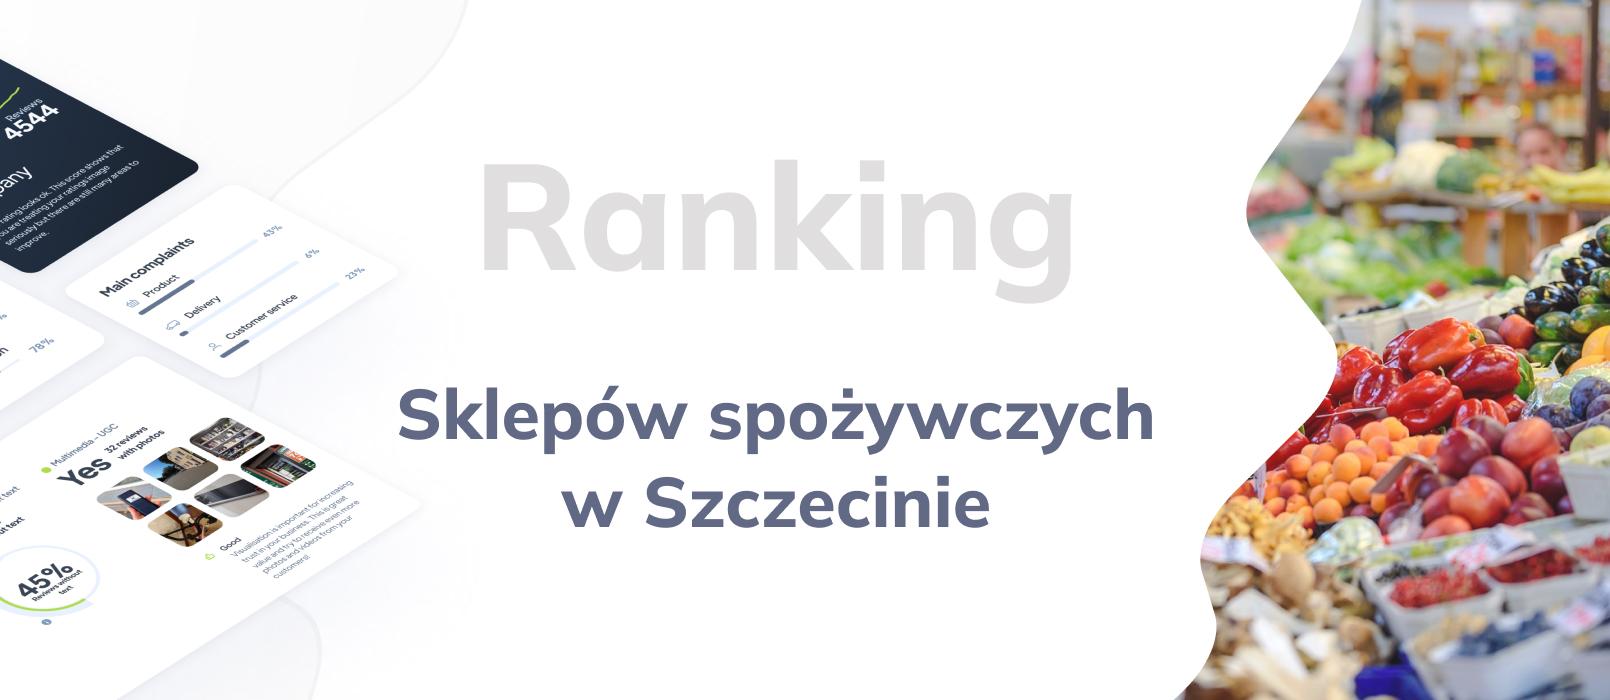 Grocery stores in Szczecin - TOP 10 ranking